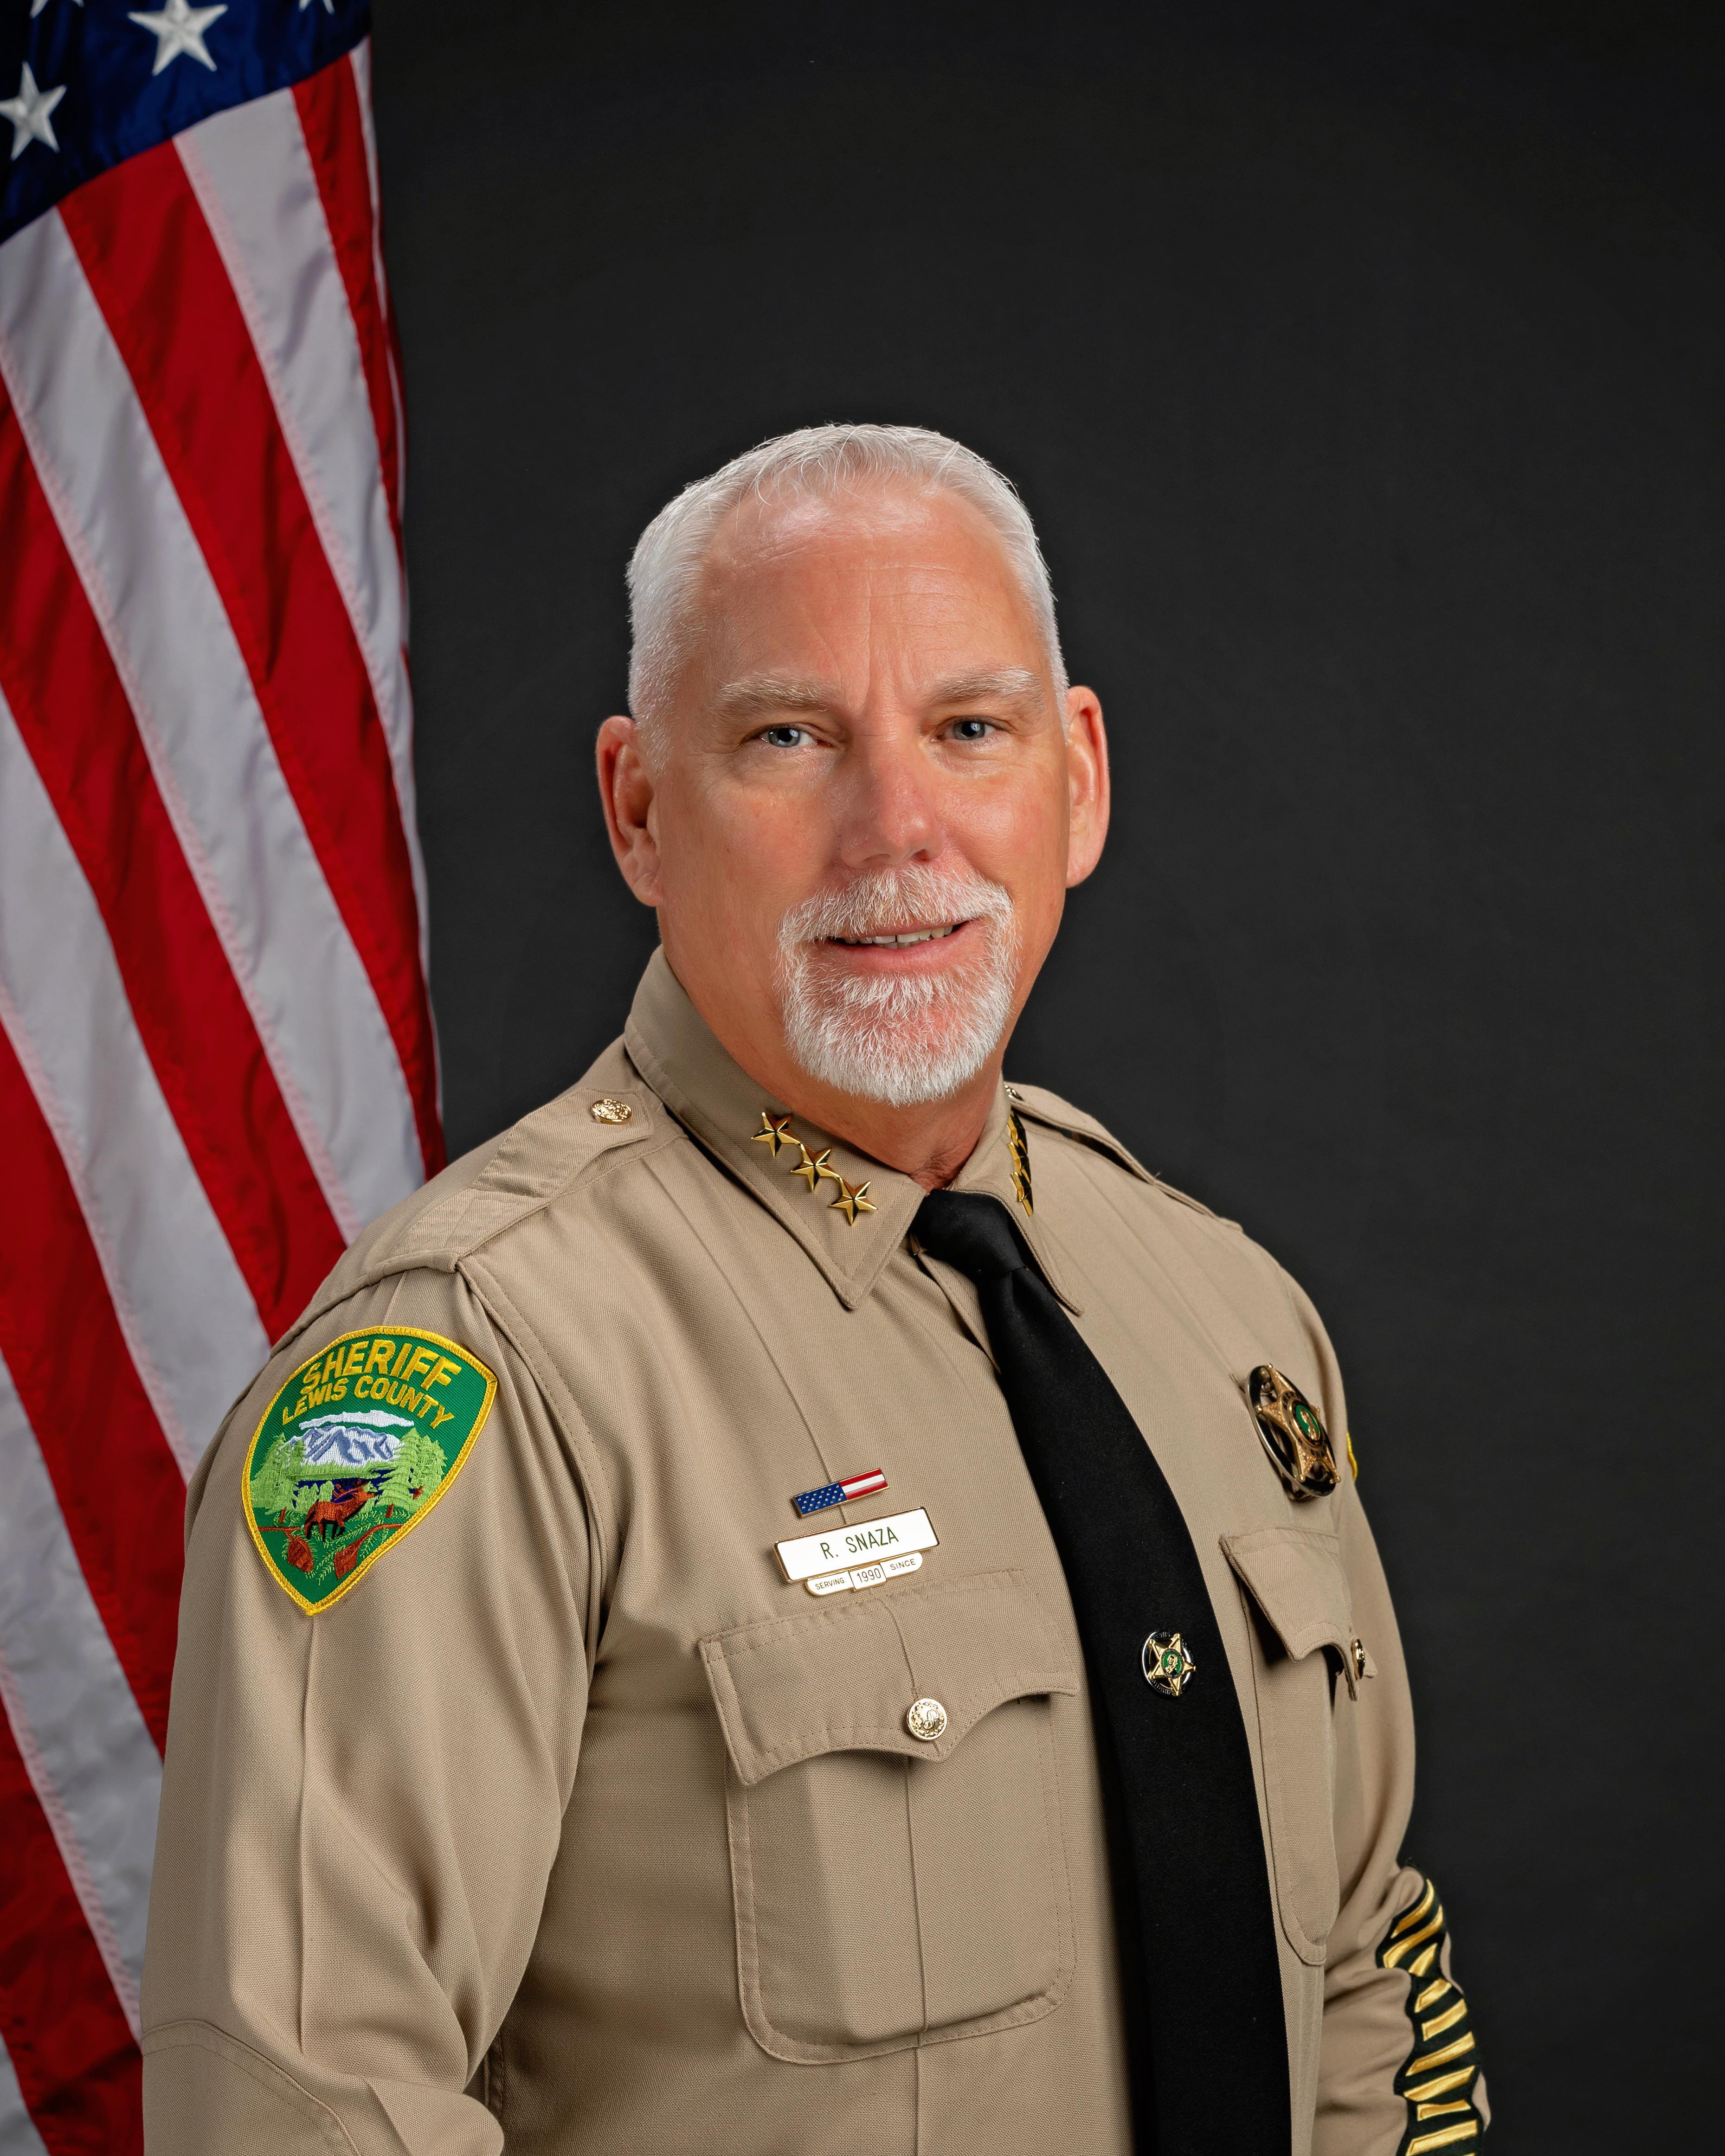 Sheriff Robert Snaza